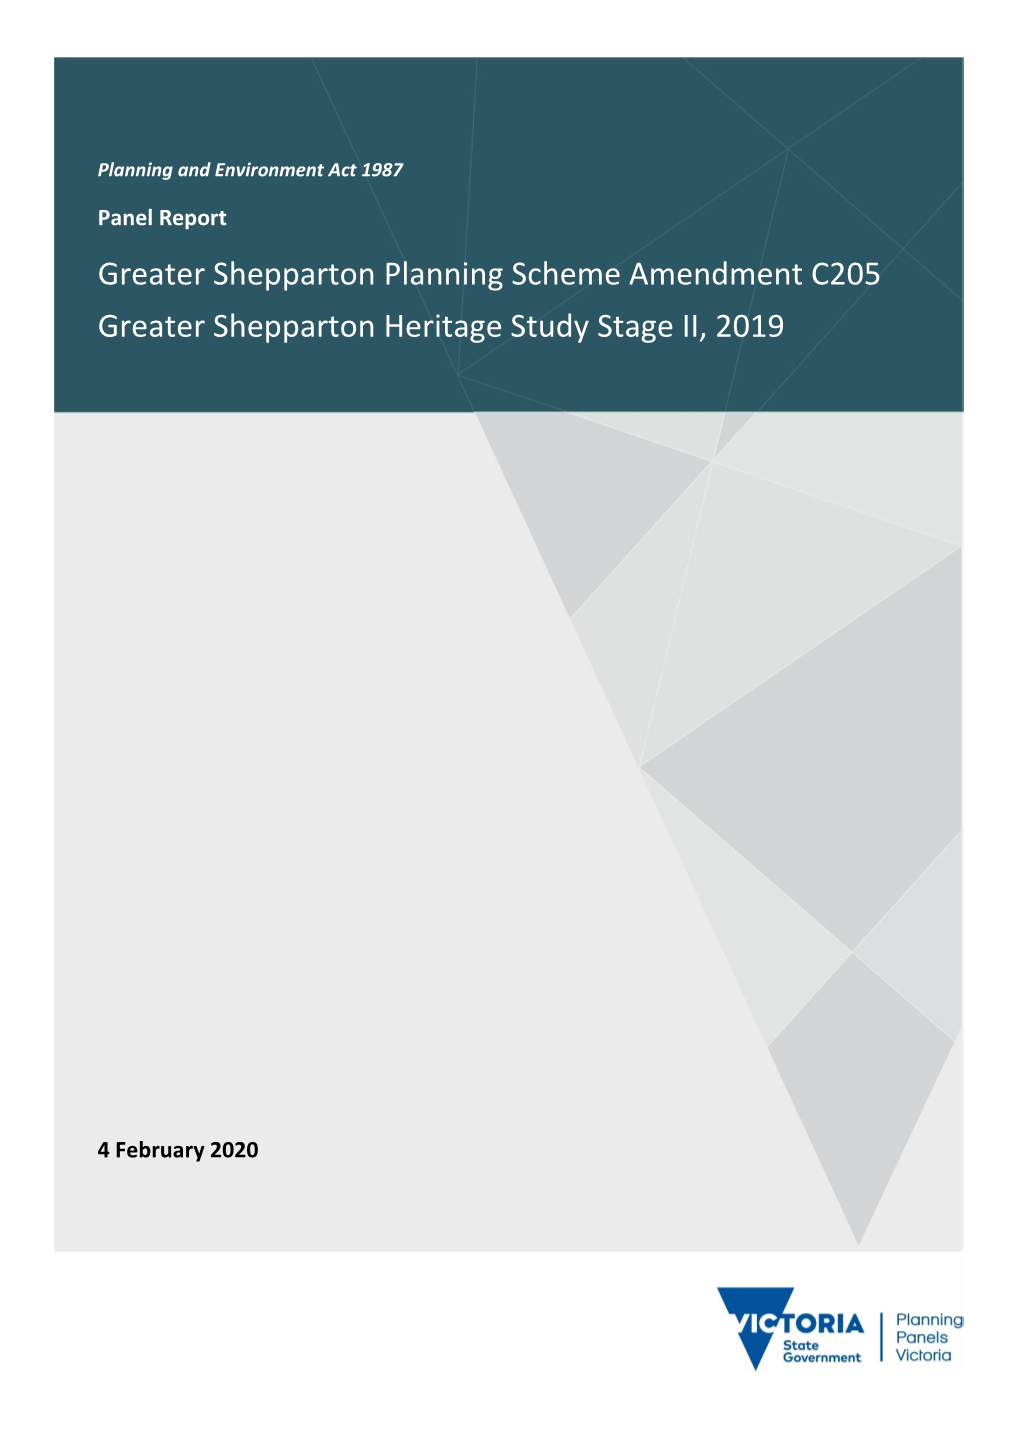 Greater Shepparton Planning Scheme Amendment C205 Greater Shepparton Heritage Study Stage II, 2019